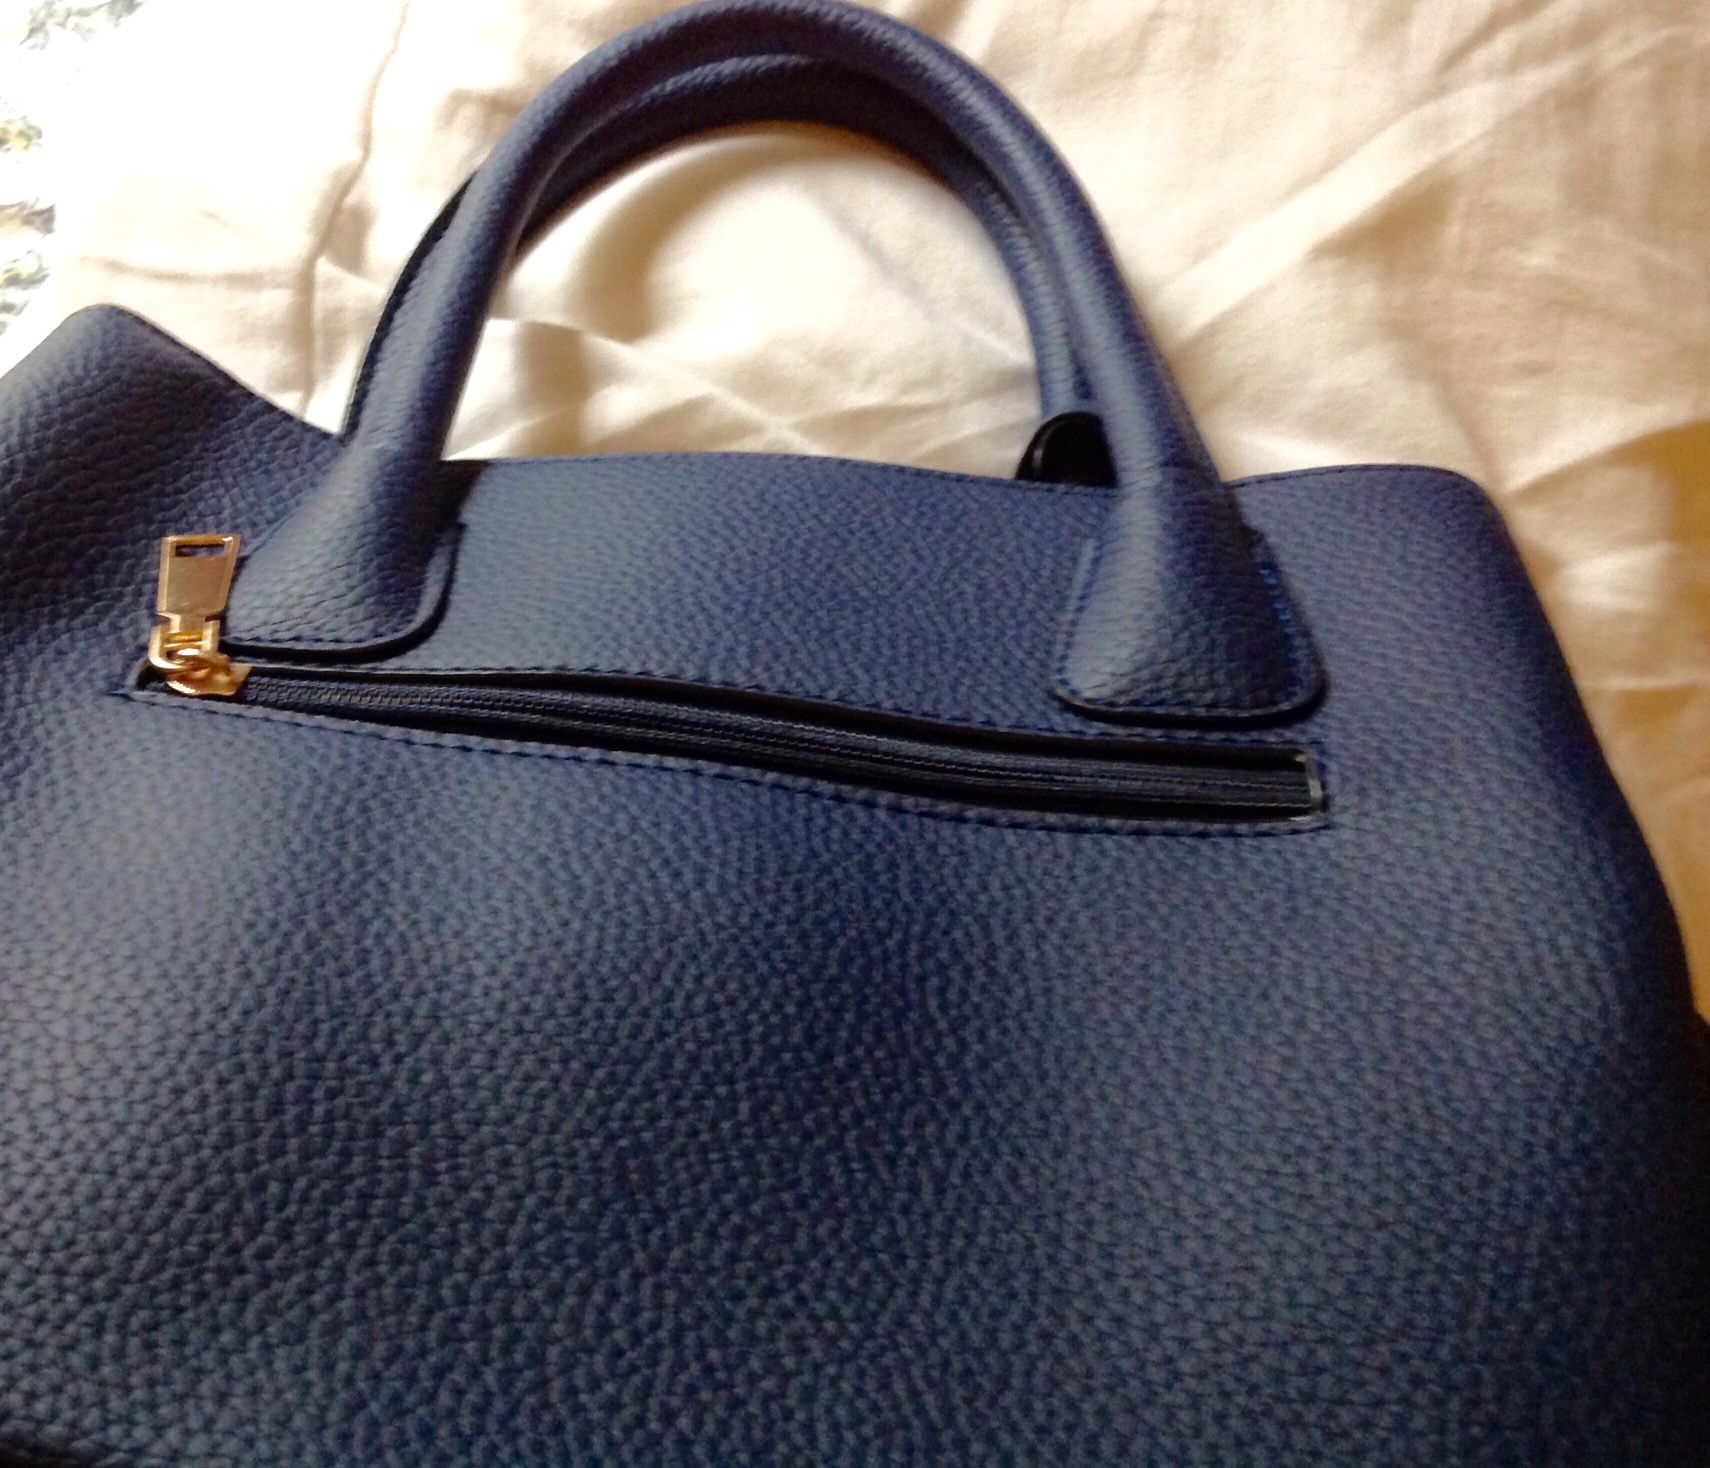 Medium Blue purse, durable Fashion Leather, W 12" by H 8", new.